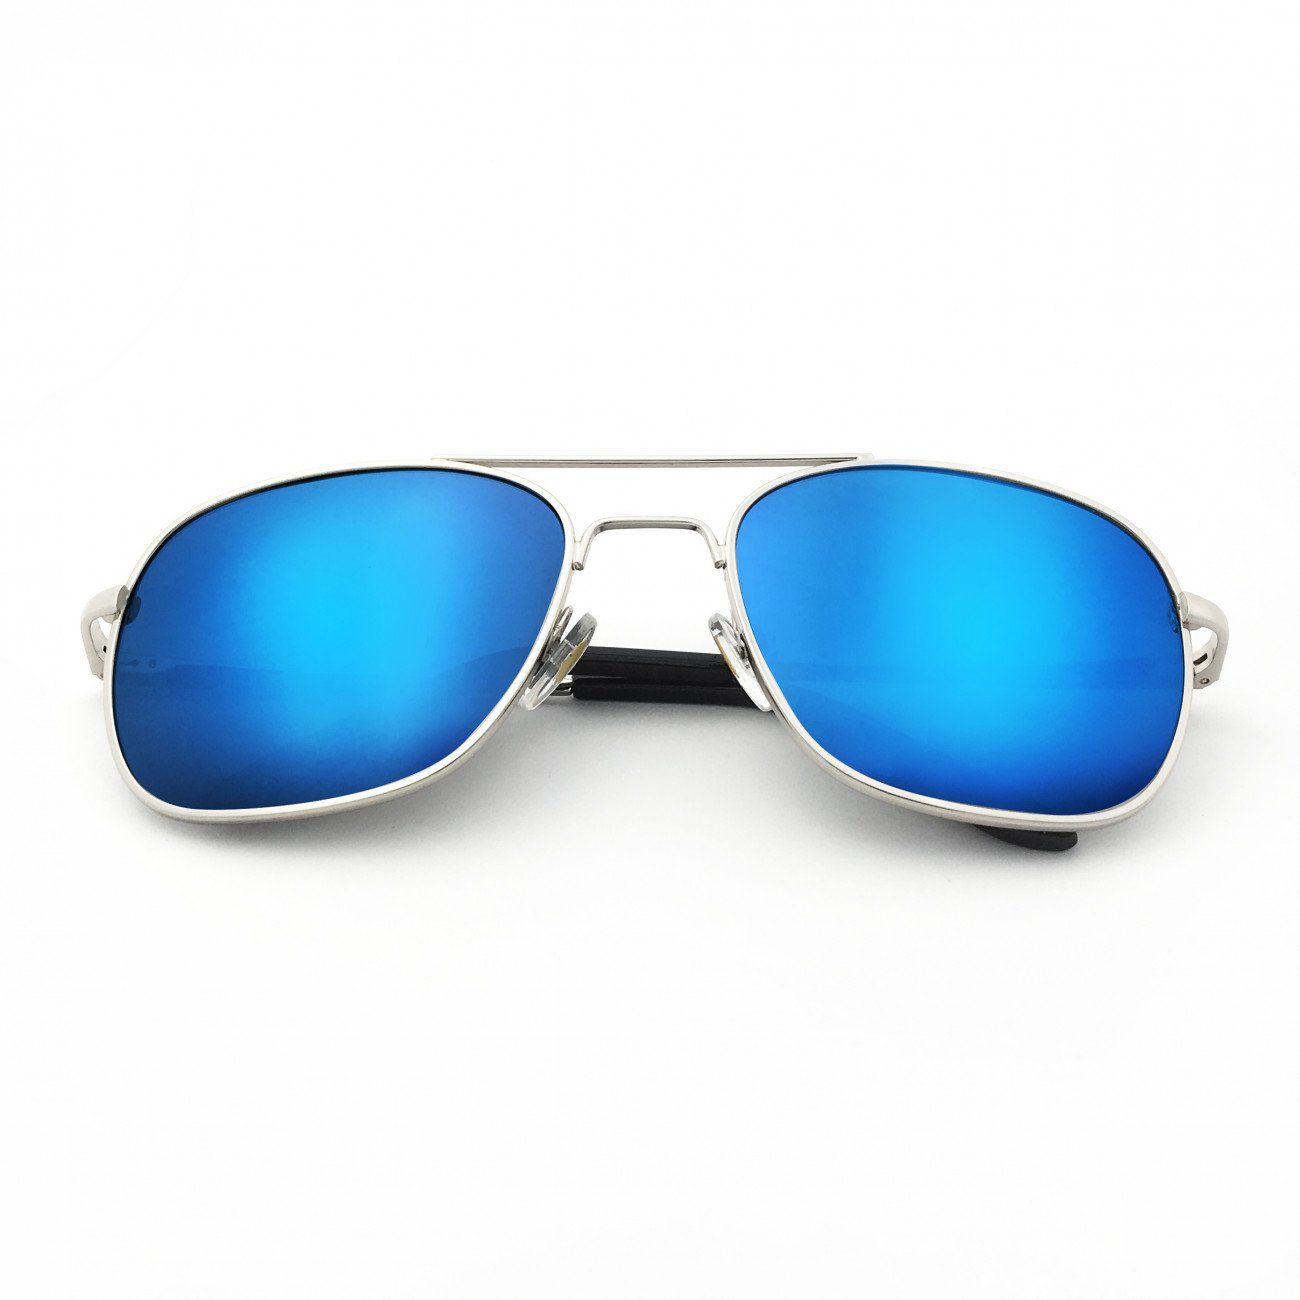 J+S Premium Military Style Classic Square Aviator Sunglasses, Polarized ...